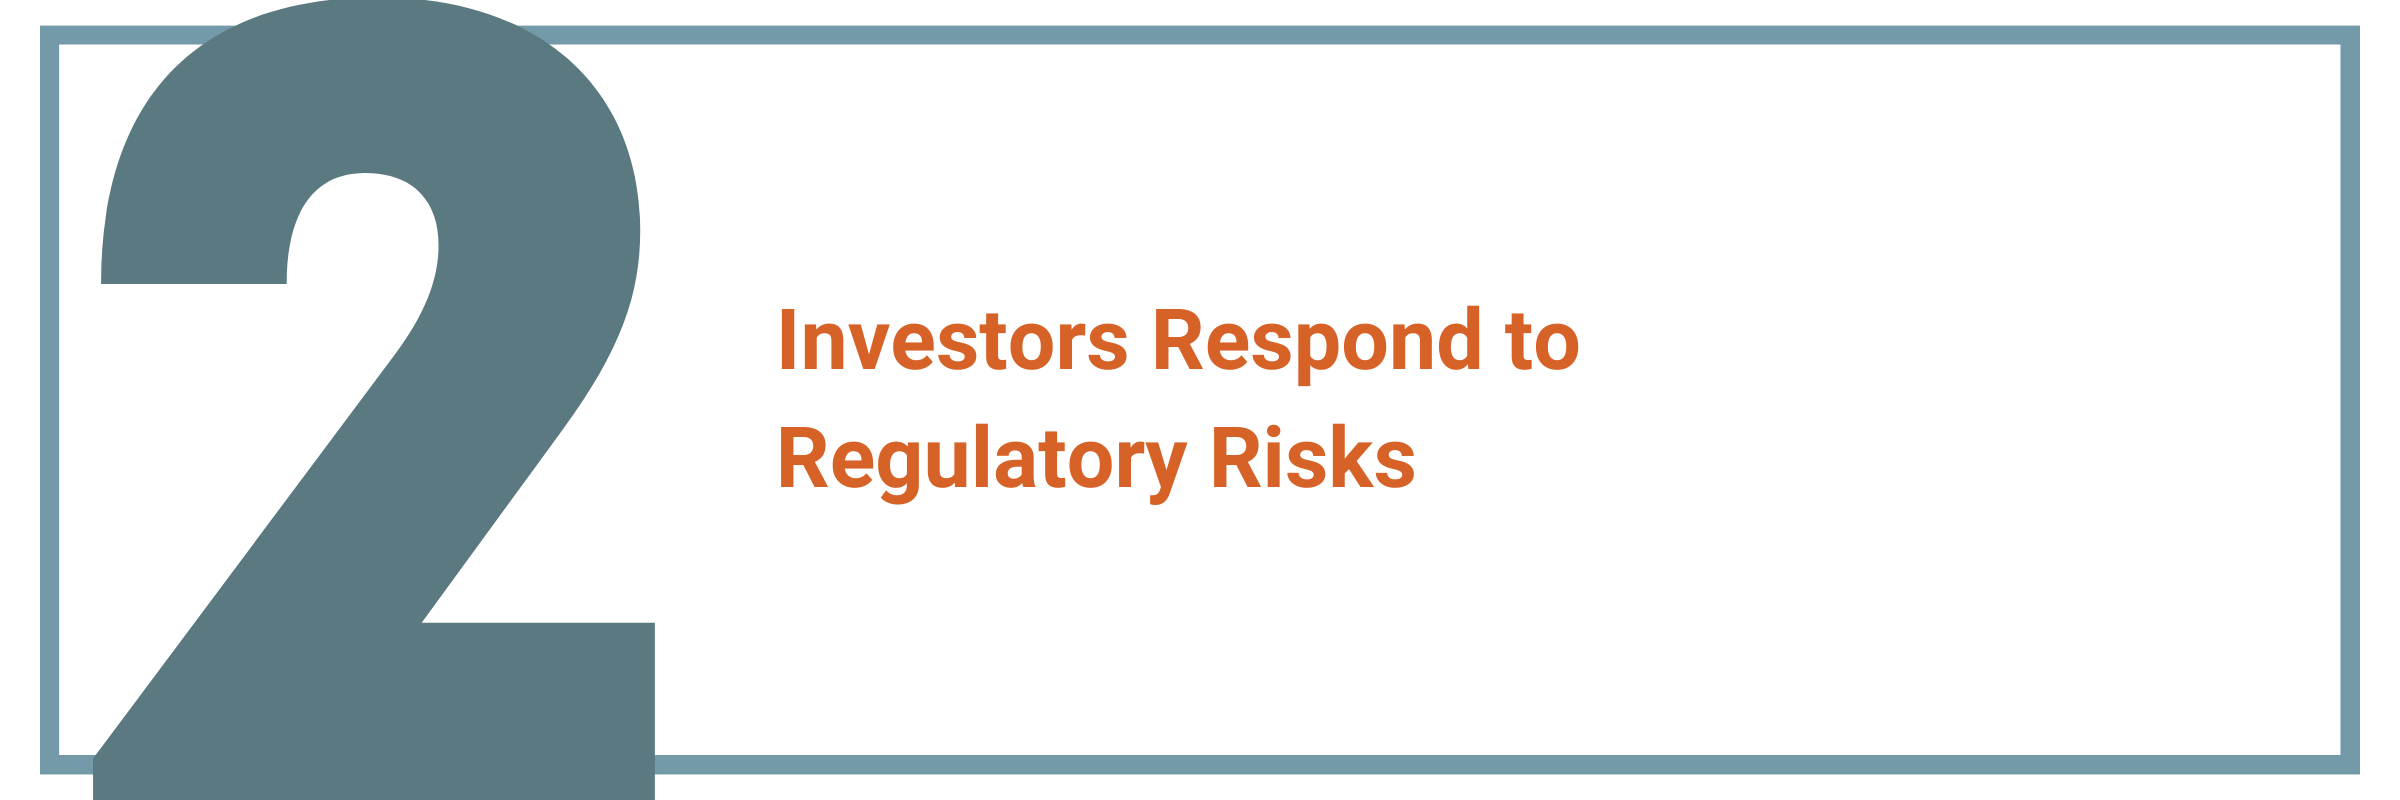 Investors Respond to Regulatory Risks